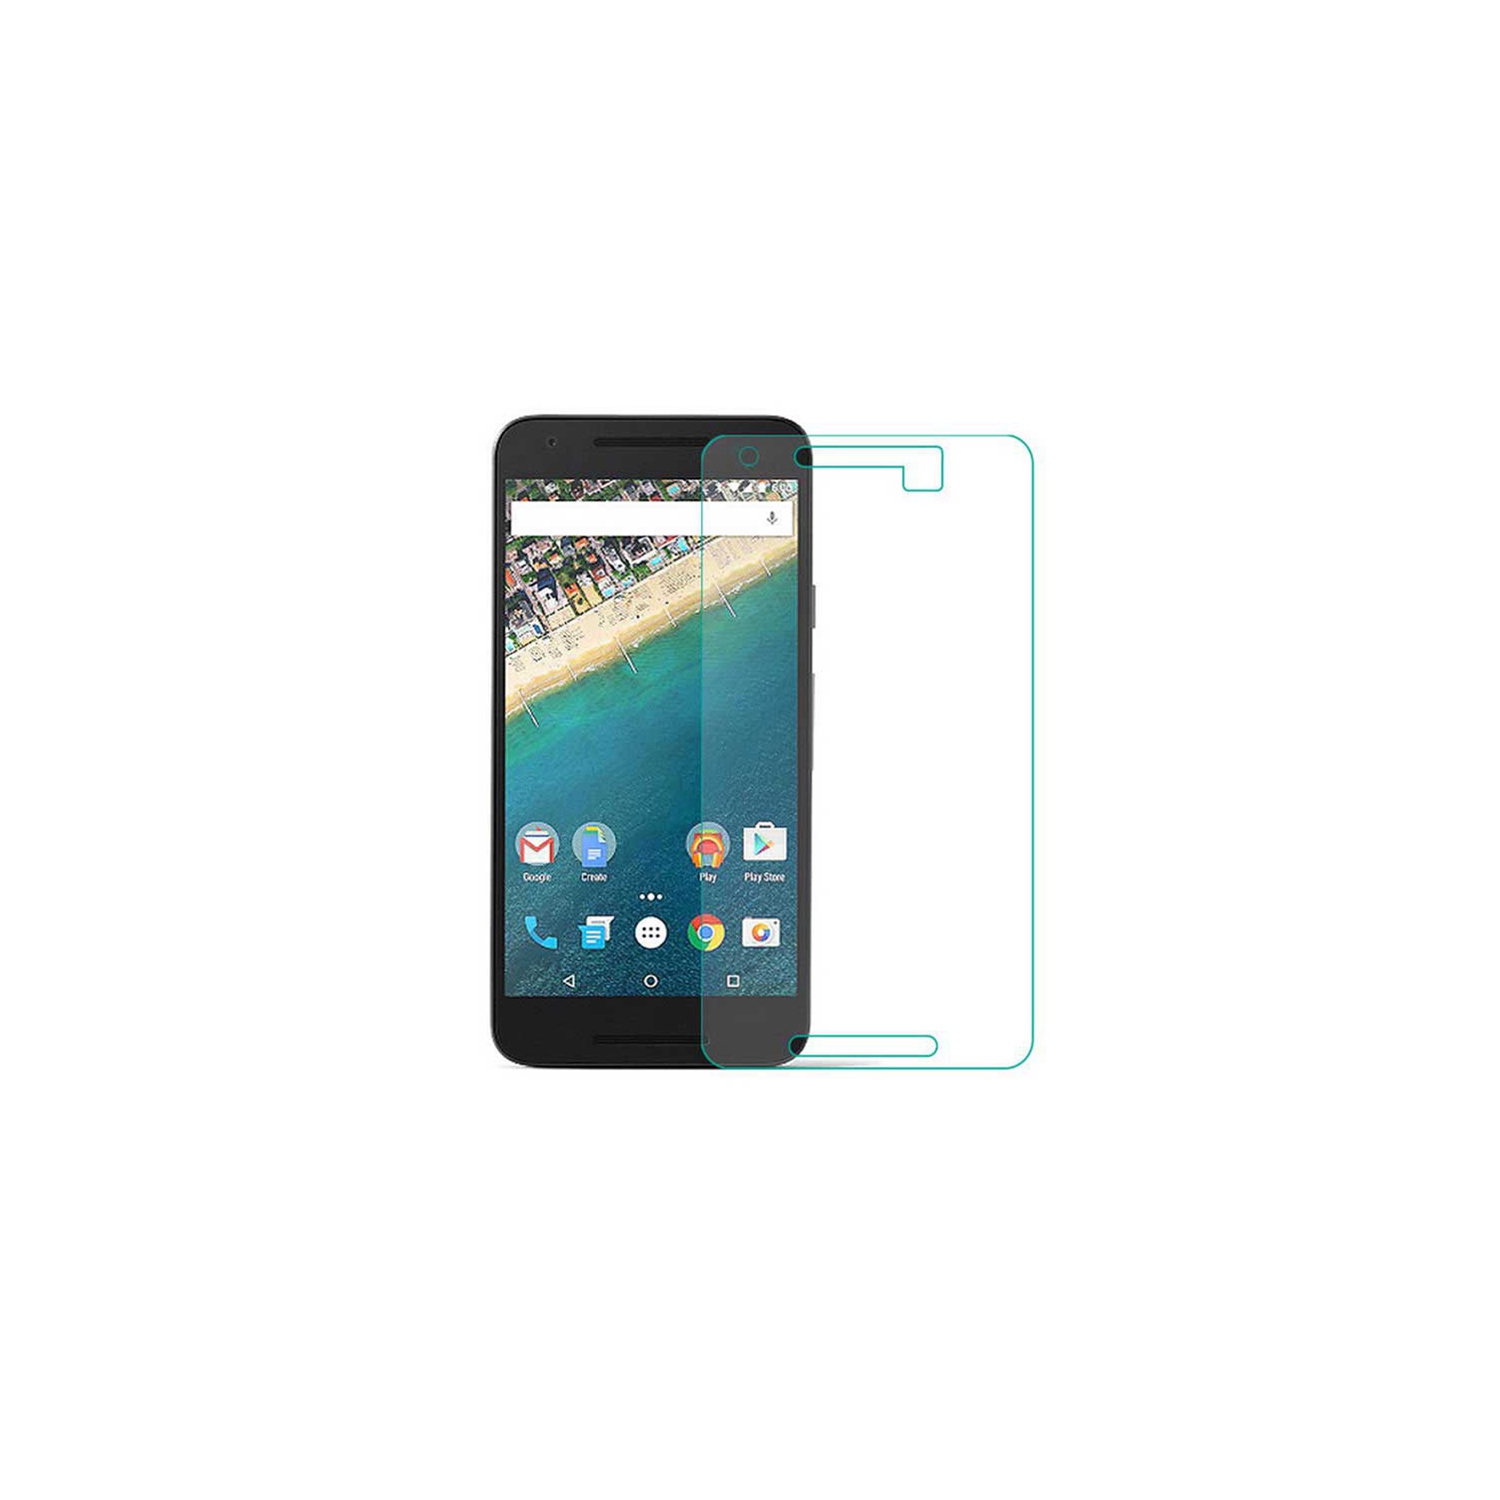 【2 Packs】 CSmart Premium Tempered Glass Screen Protector for Google Nexus 6P, Case Friendly & Bubble Free